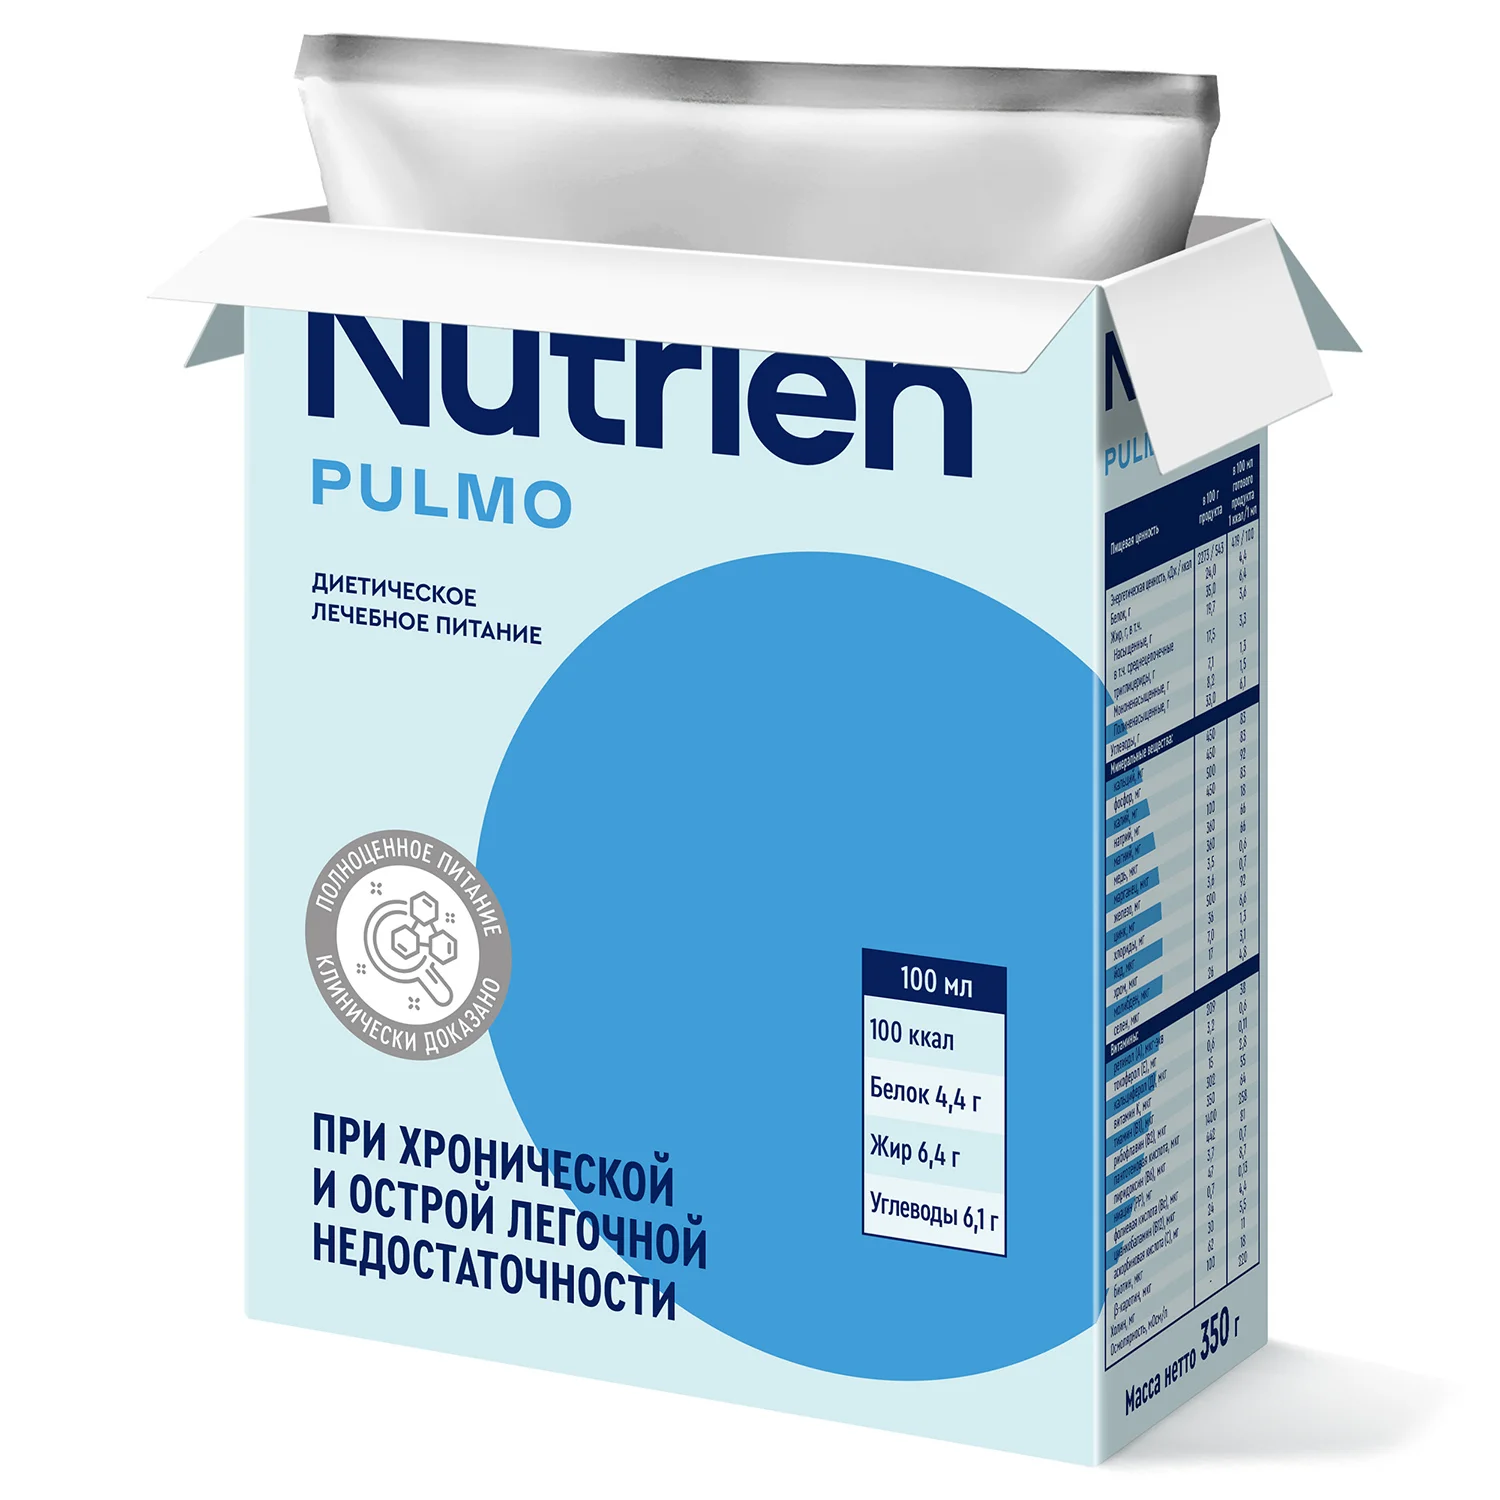 Nutrien Pulmo - 2